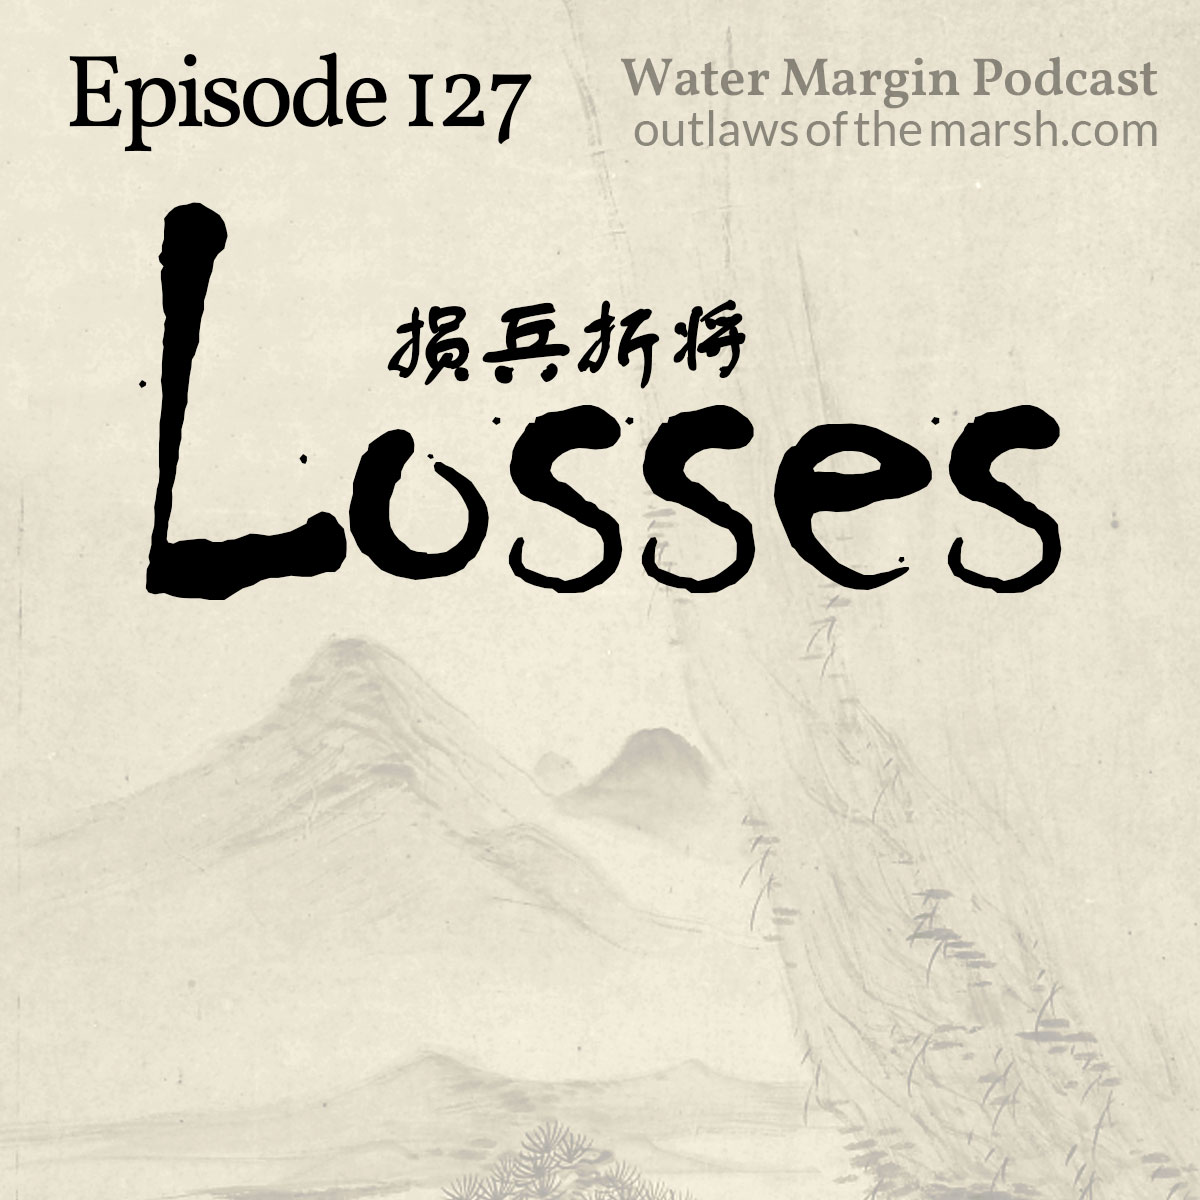 Water Margin Podcast: Episode 127